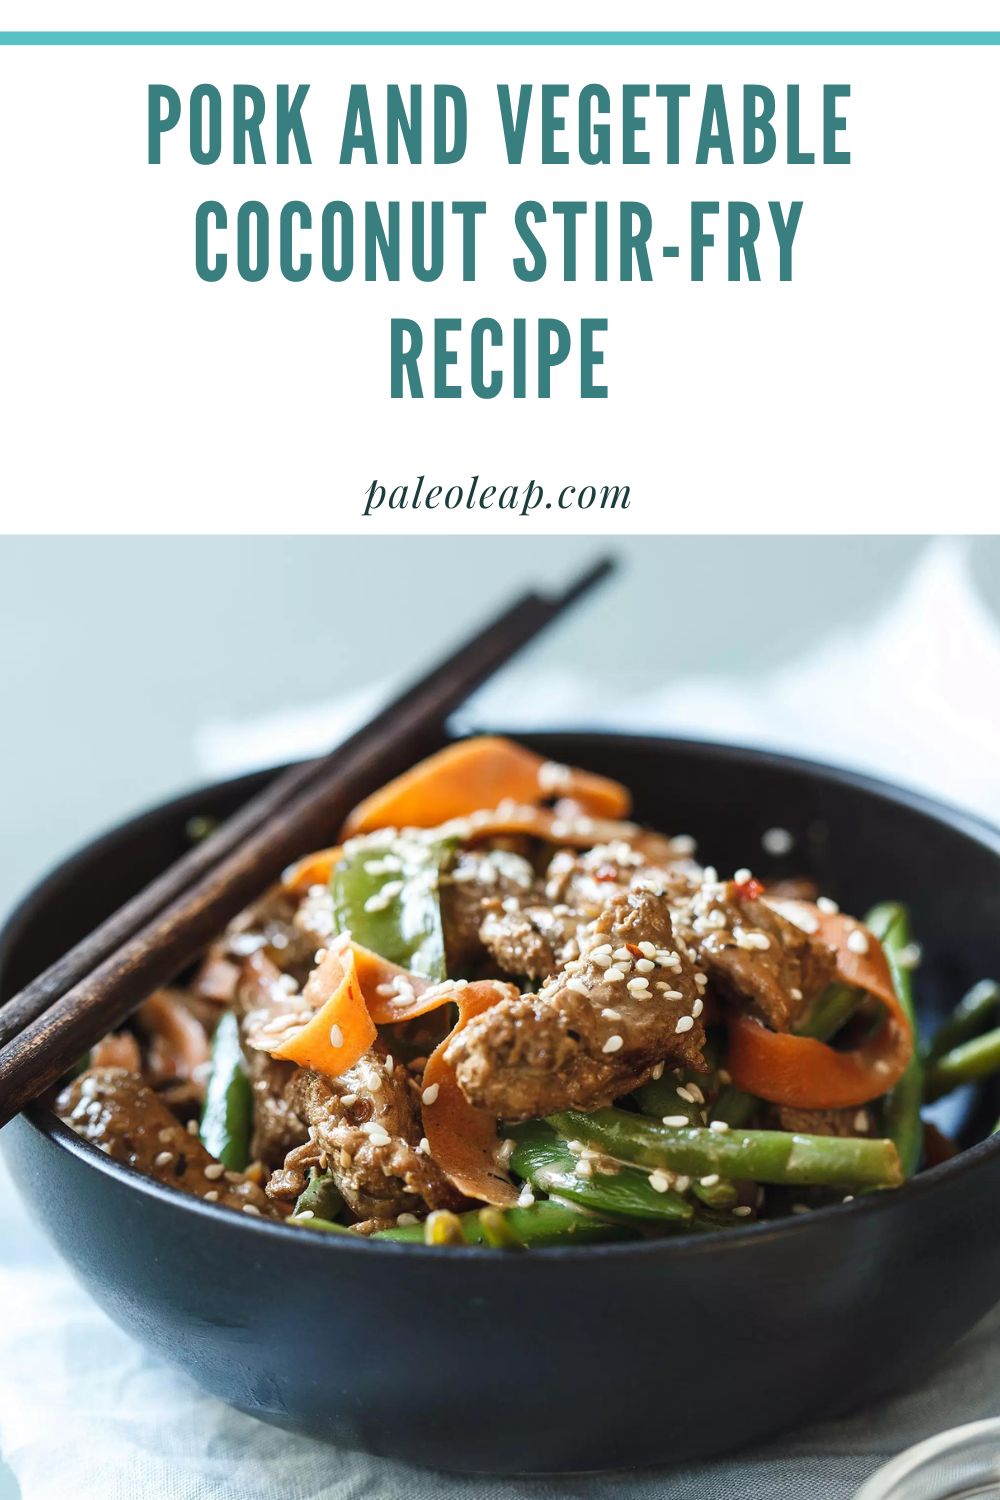 Pork and Vegetable Coconut Stir-Fry Recipe | Paleo Leap